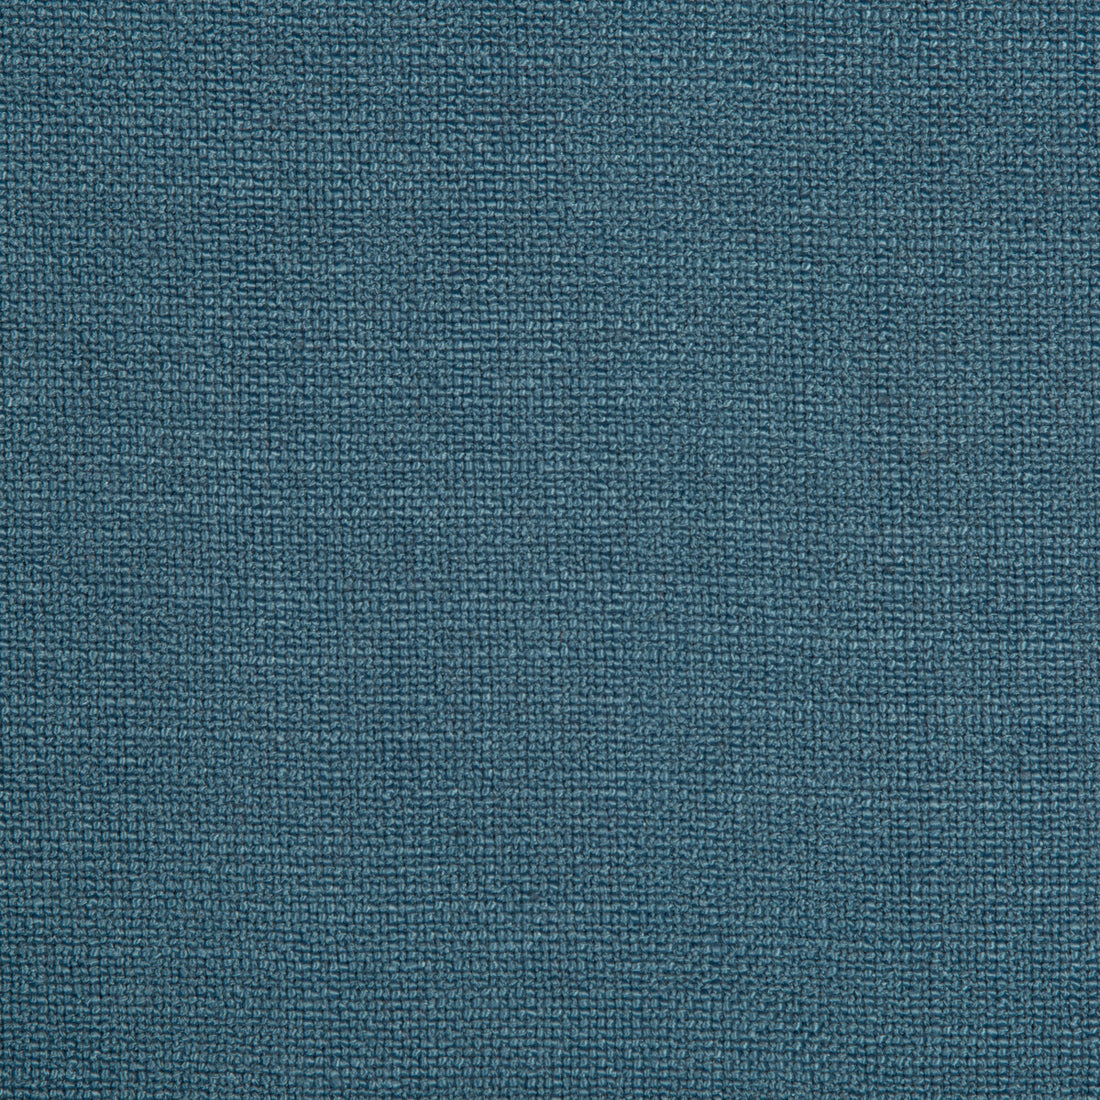 Kravet Smart fabric in 35145-5 color - pattern 35145.5.0 - by Kravet Smart